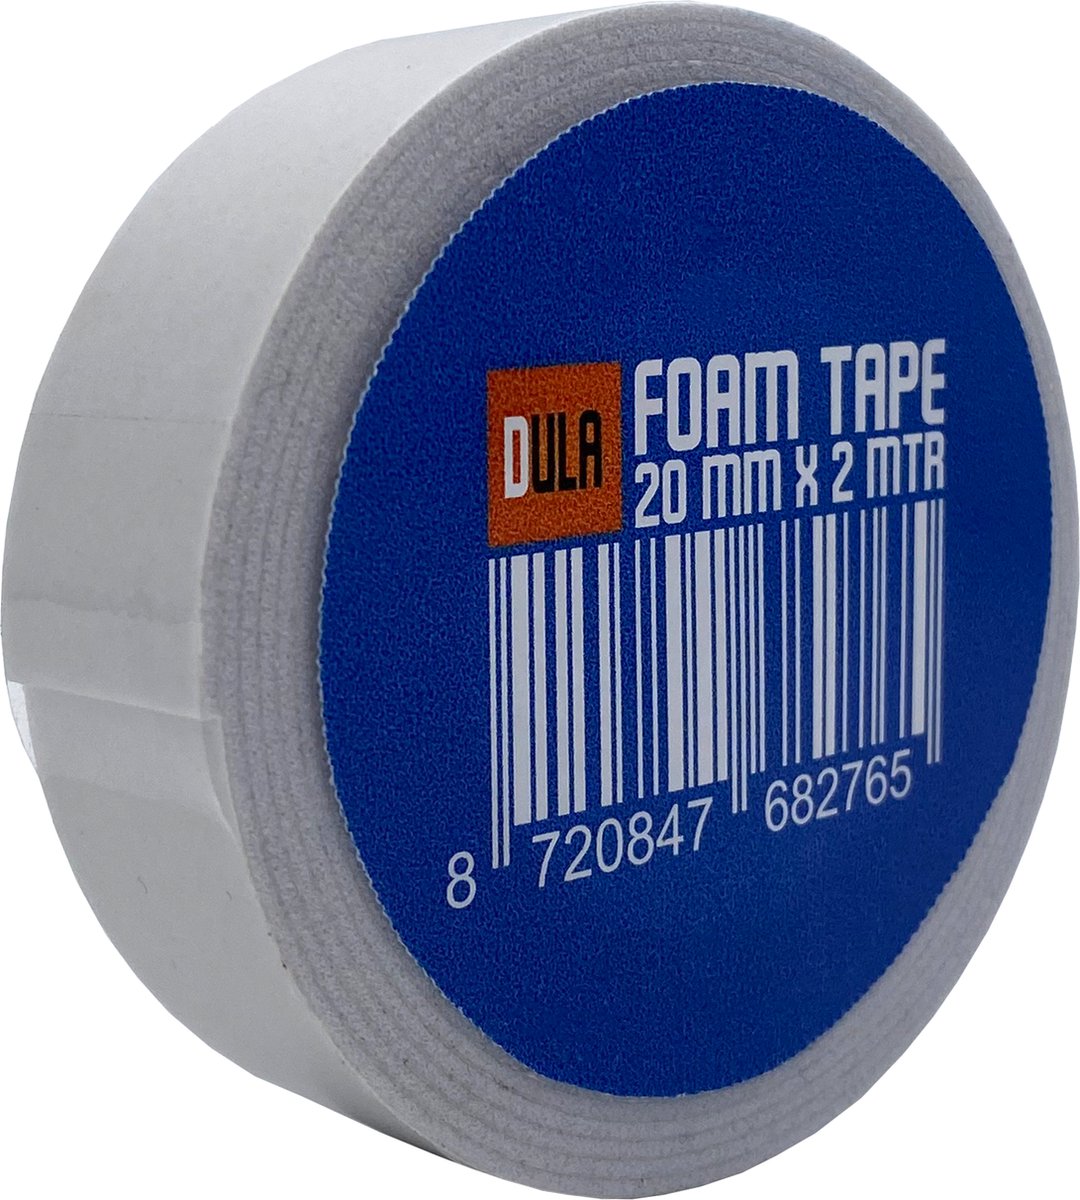 DULA Foam tape - Montage tape - Dubbelzijdig tape - Wit - 20mm x 2 m - DULA